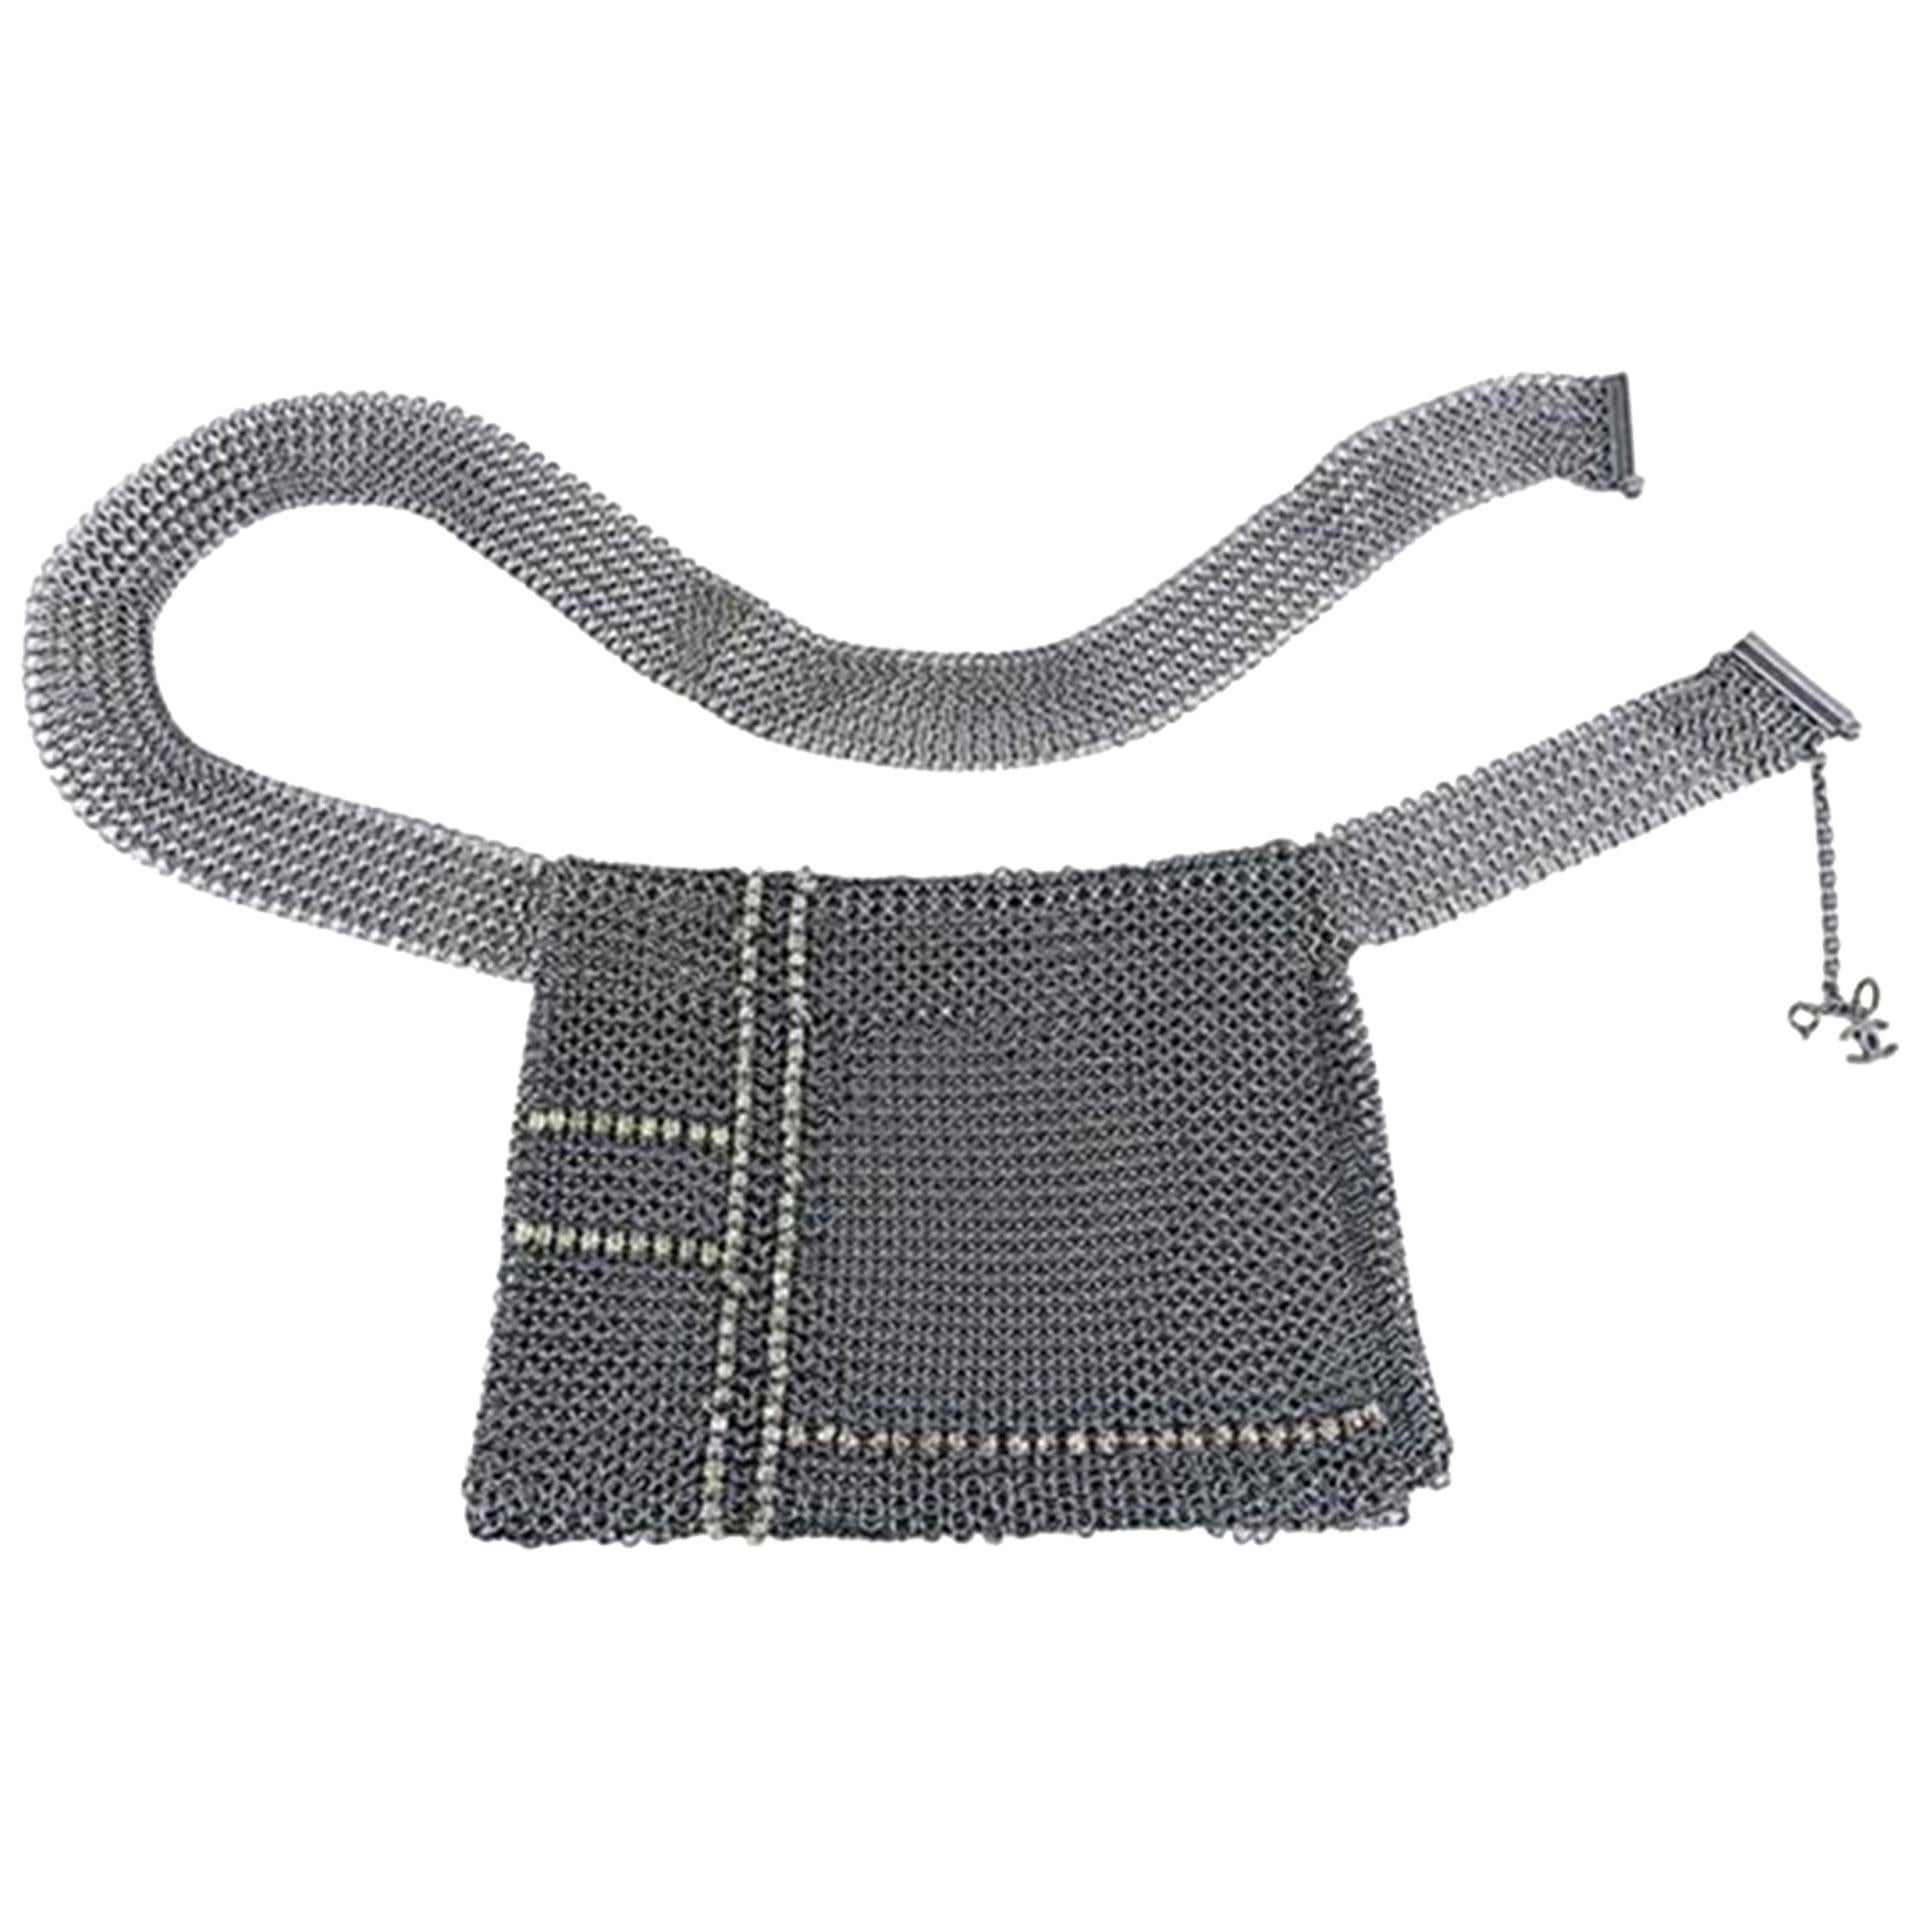 Chanel Waist Vintage 1999 Spring Mesh Belt Bum Fanny Pack Cross Body Chain Bag